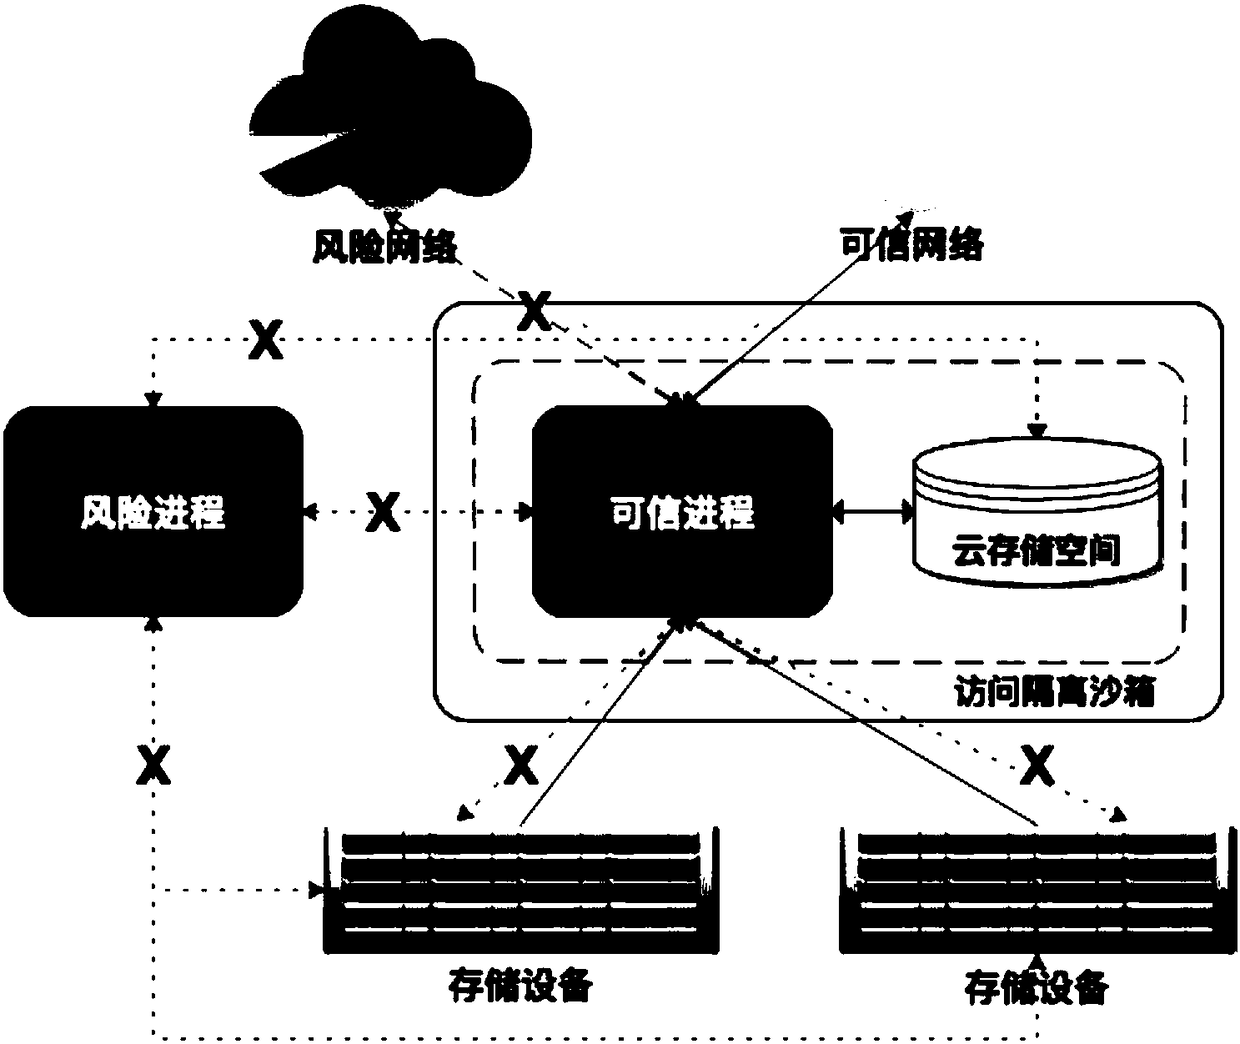 Cloud storage security access method based on sandbox technology